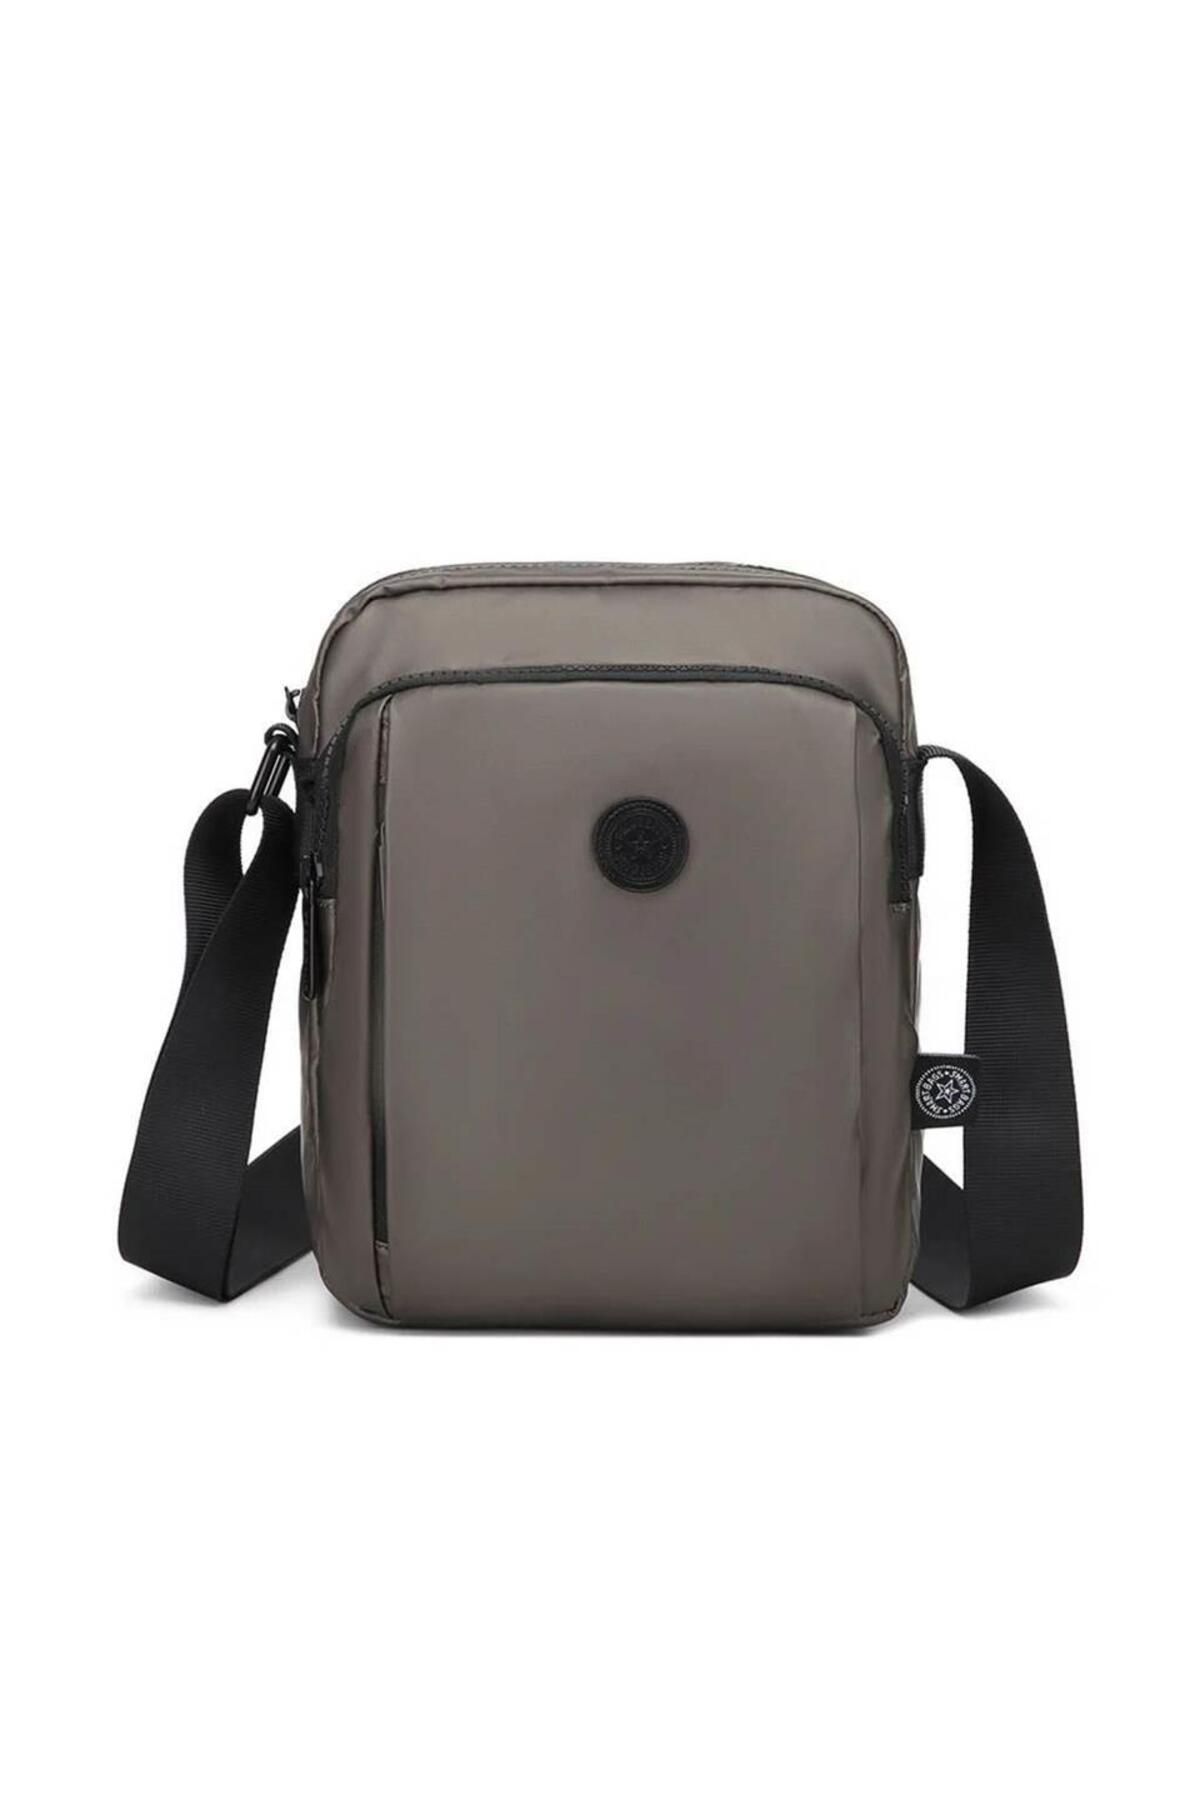 Smart Bags 8651 Çapraz Çanta M.Bakır